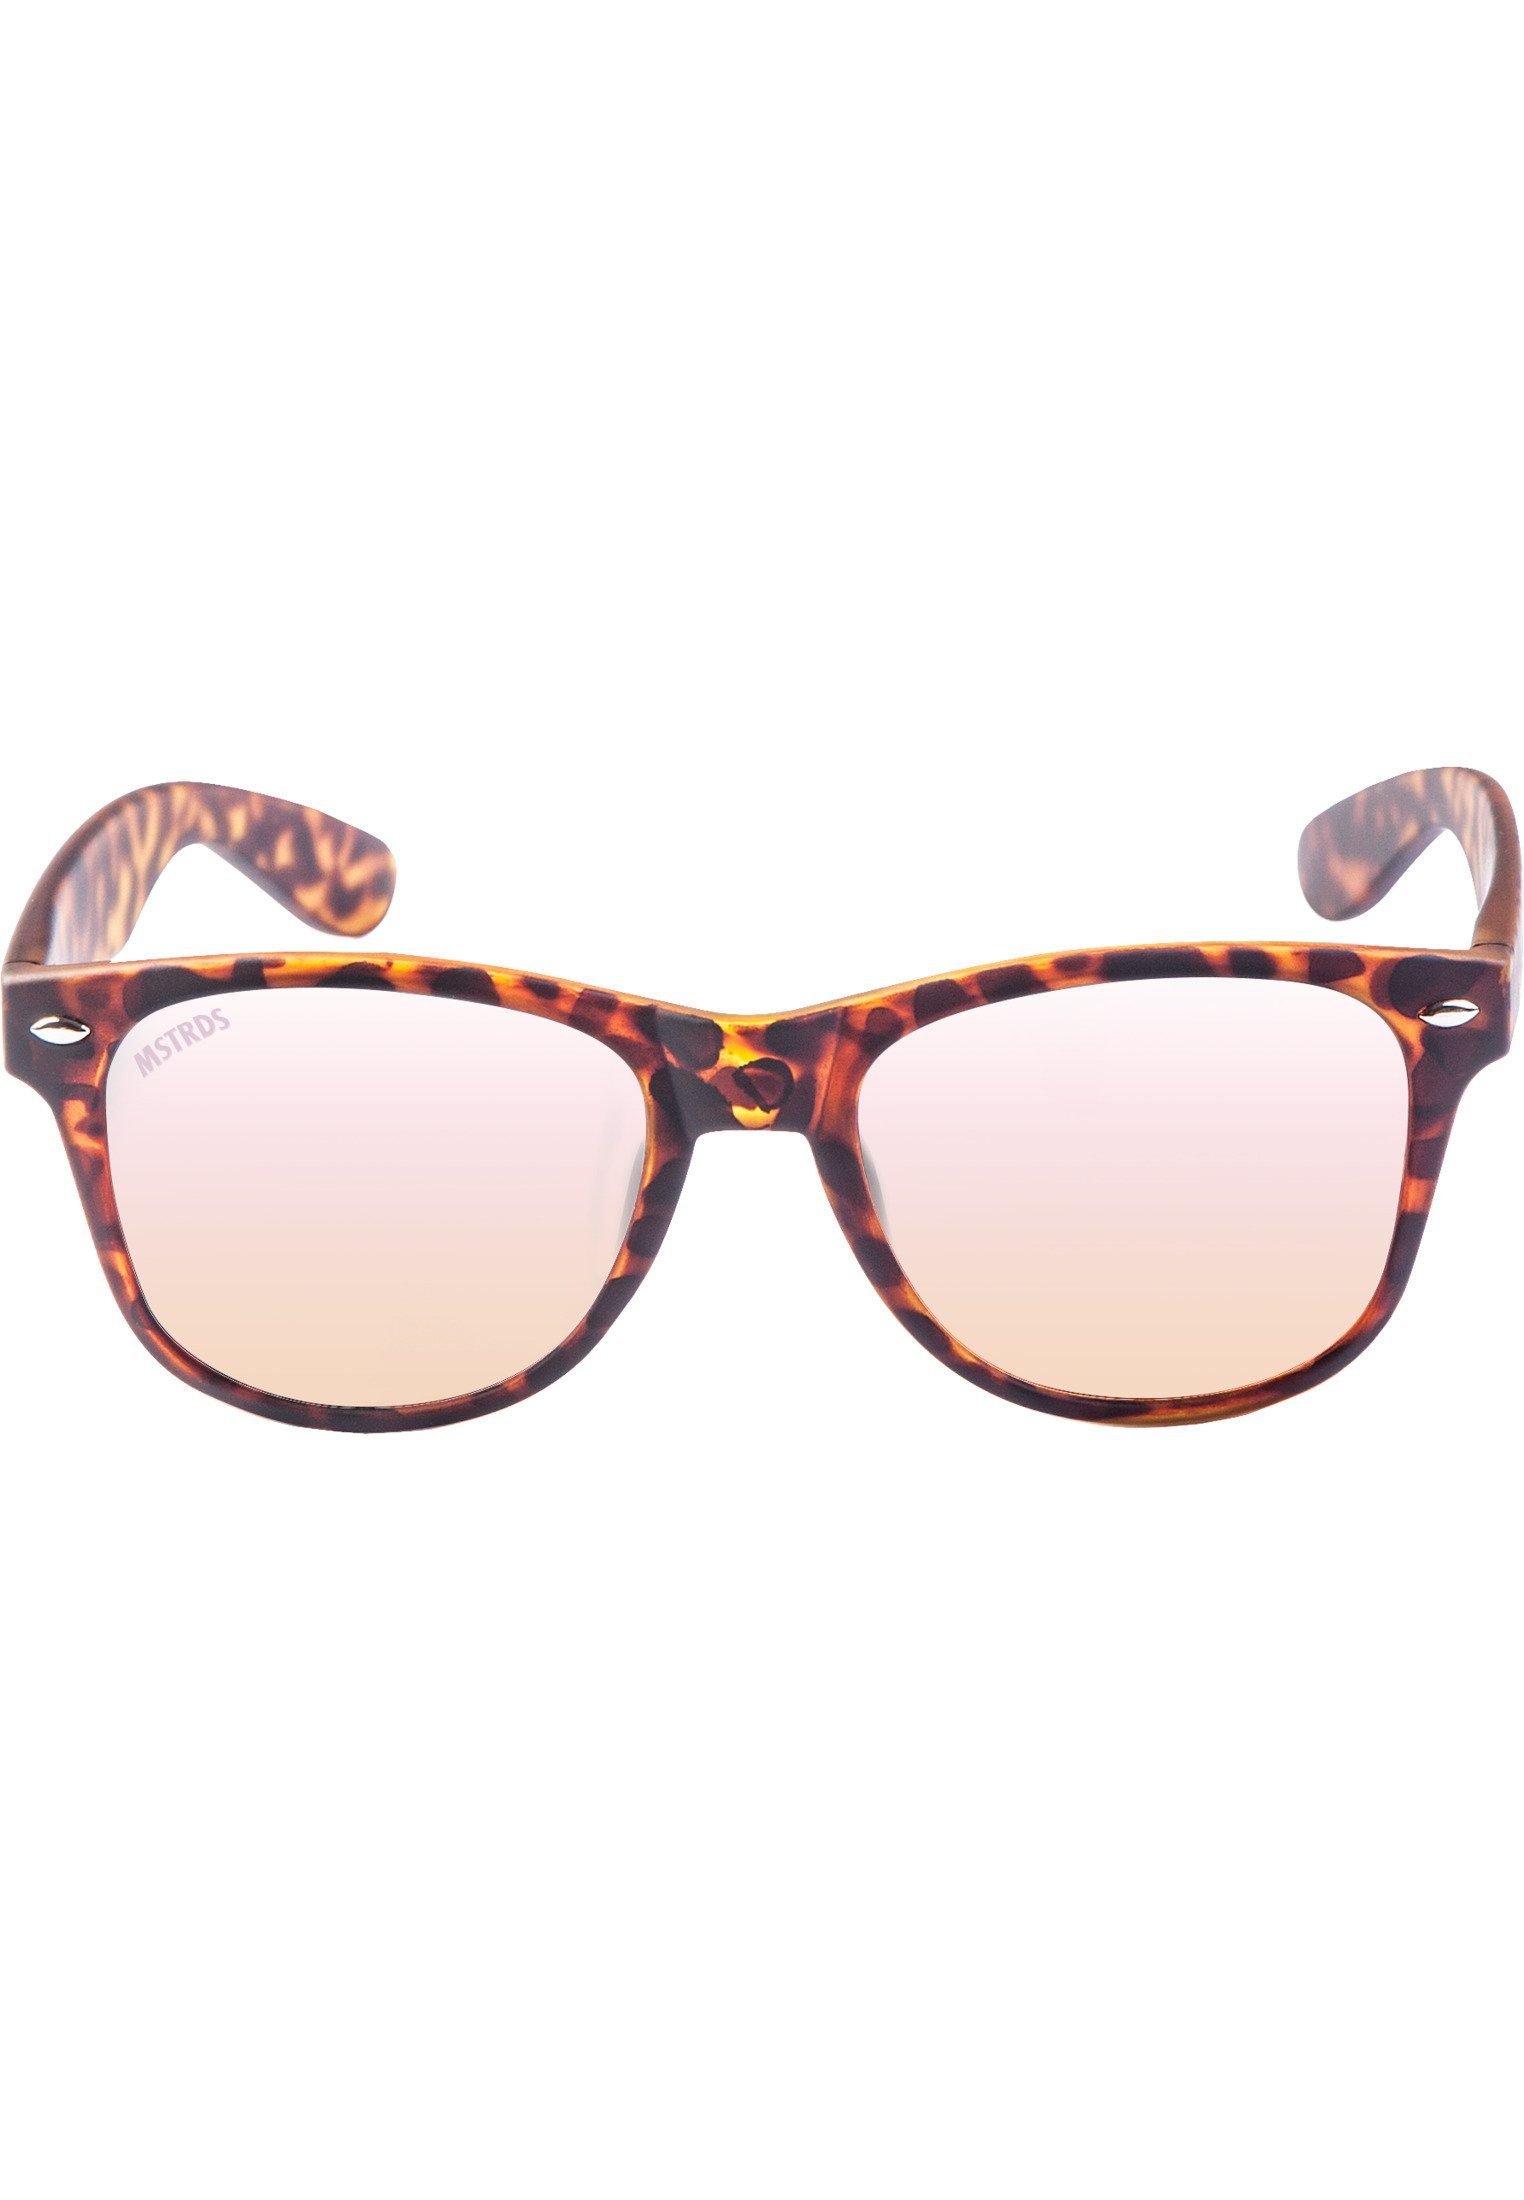 Sonnenbrille Likoma havanna/rosé Youth Sunglasses Accessoires MSTRDS